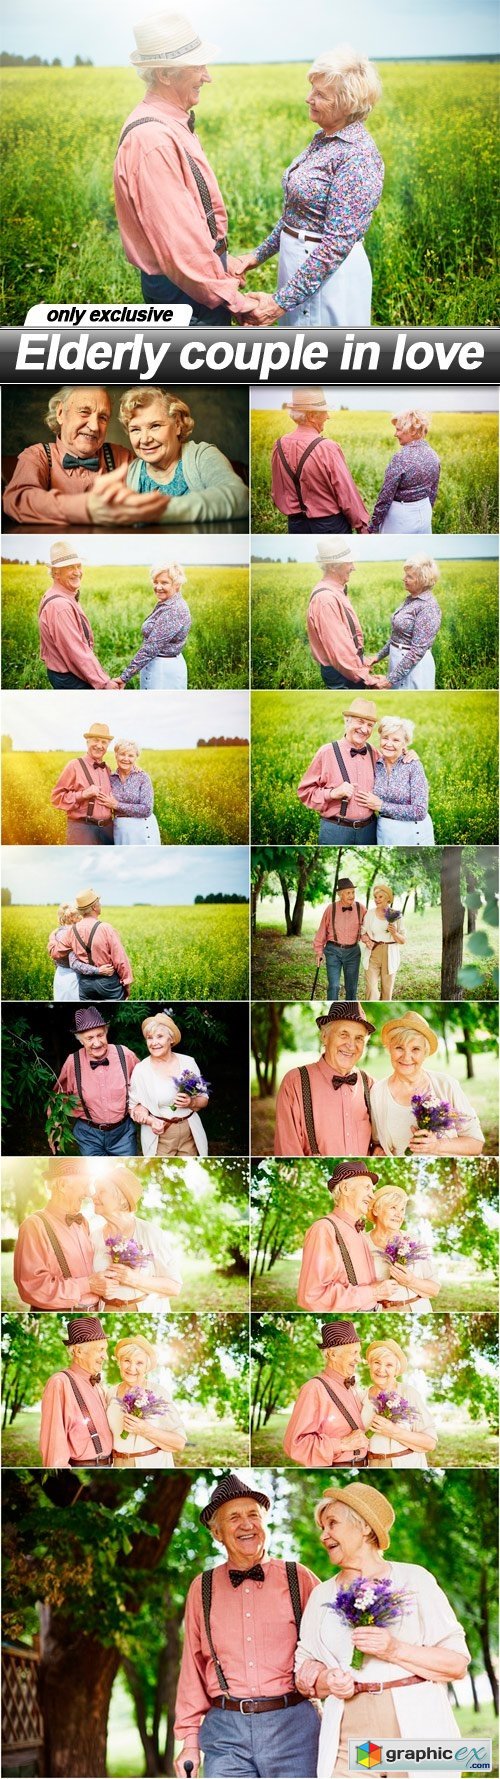 Elderly couple in love - 15 UHQ JPEG